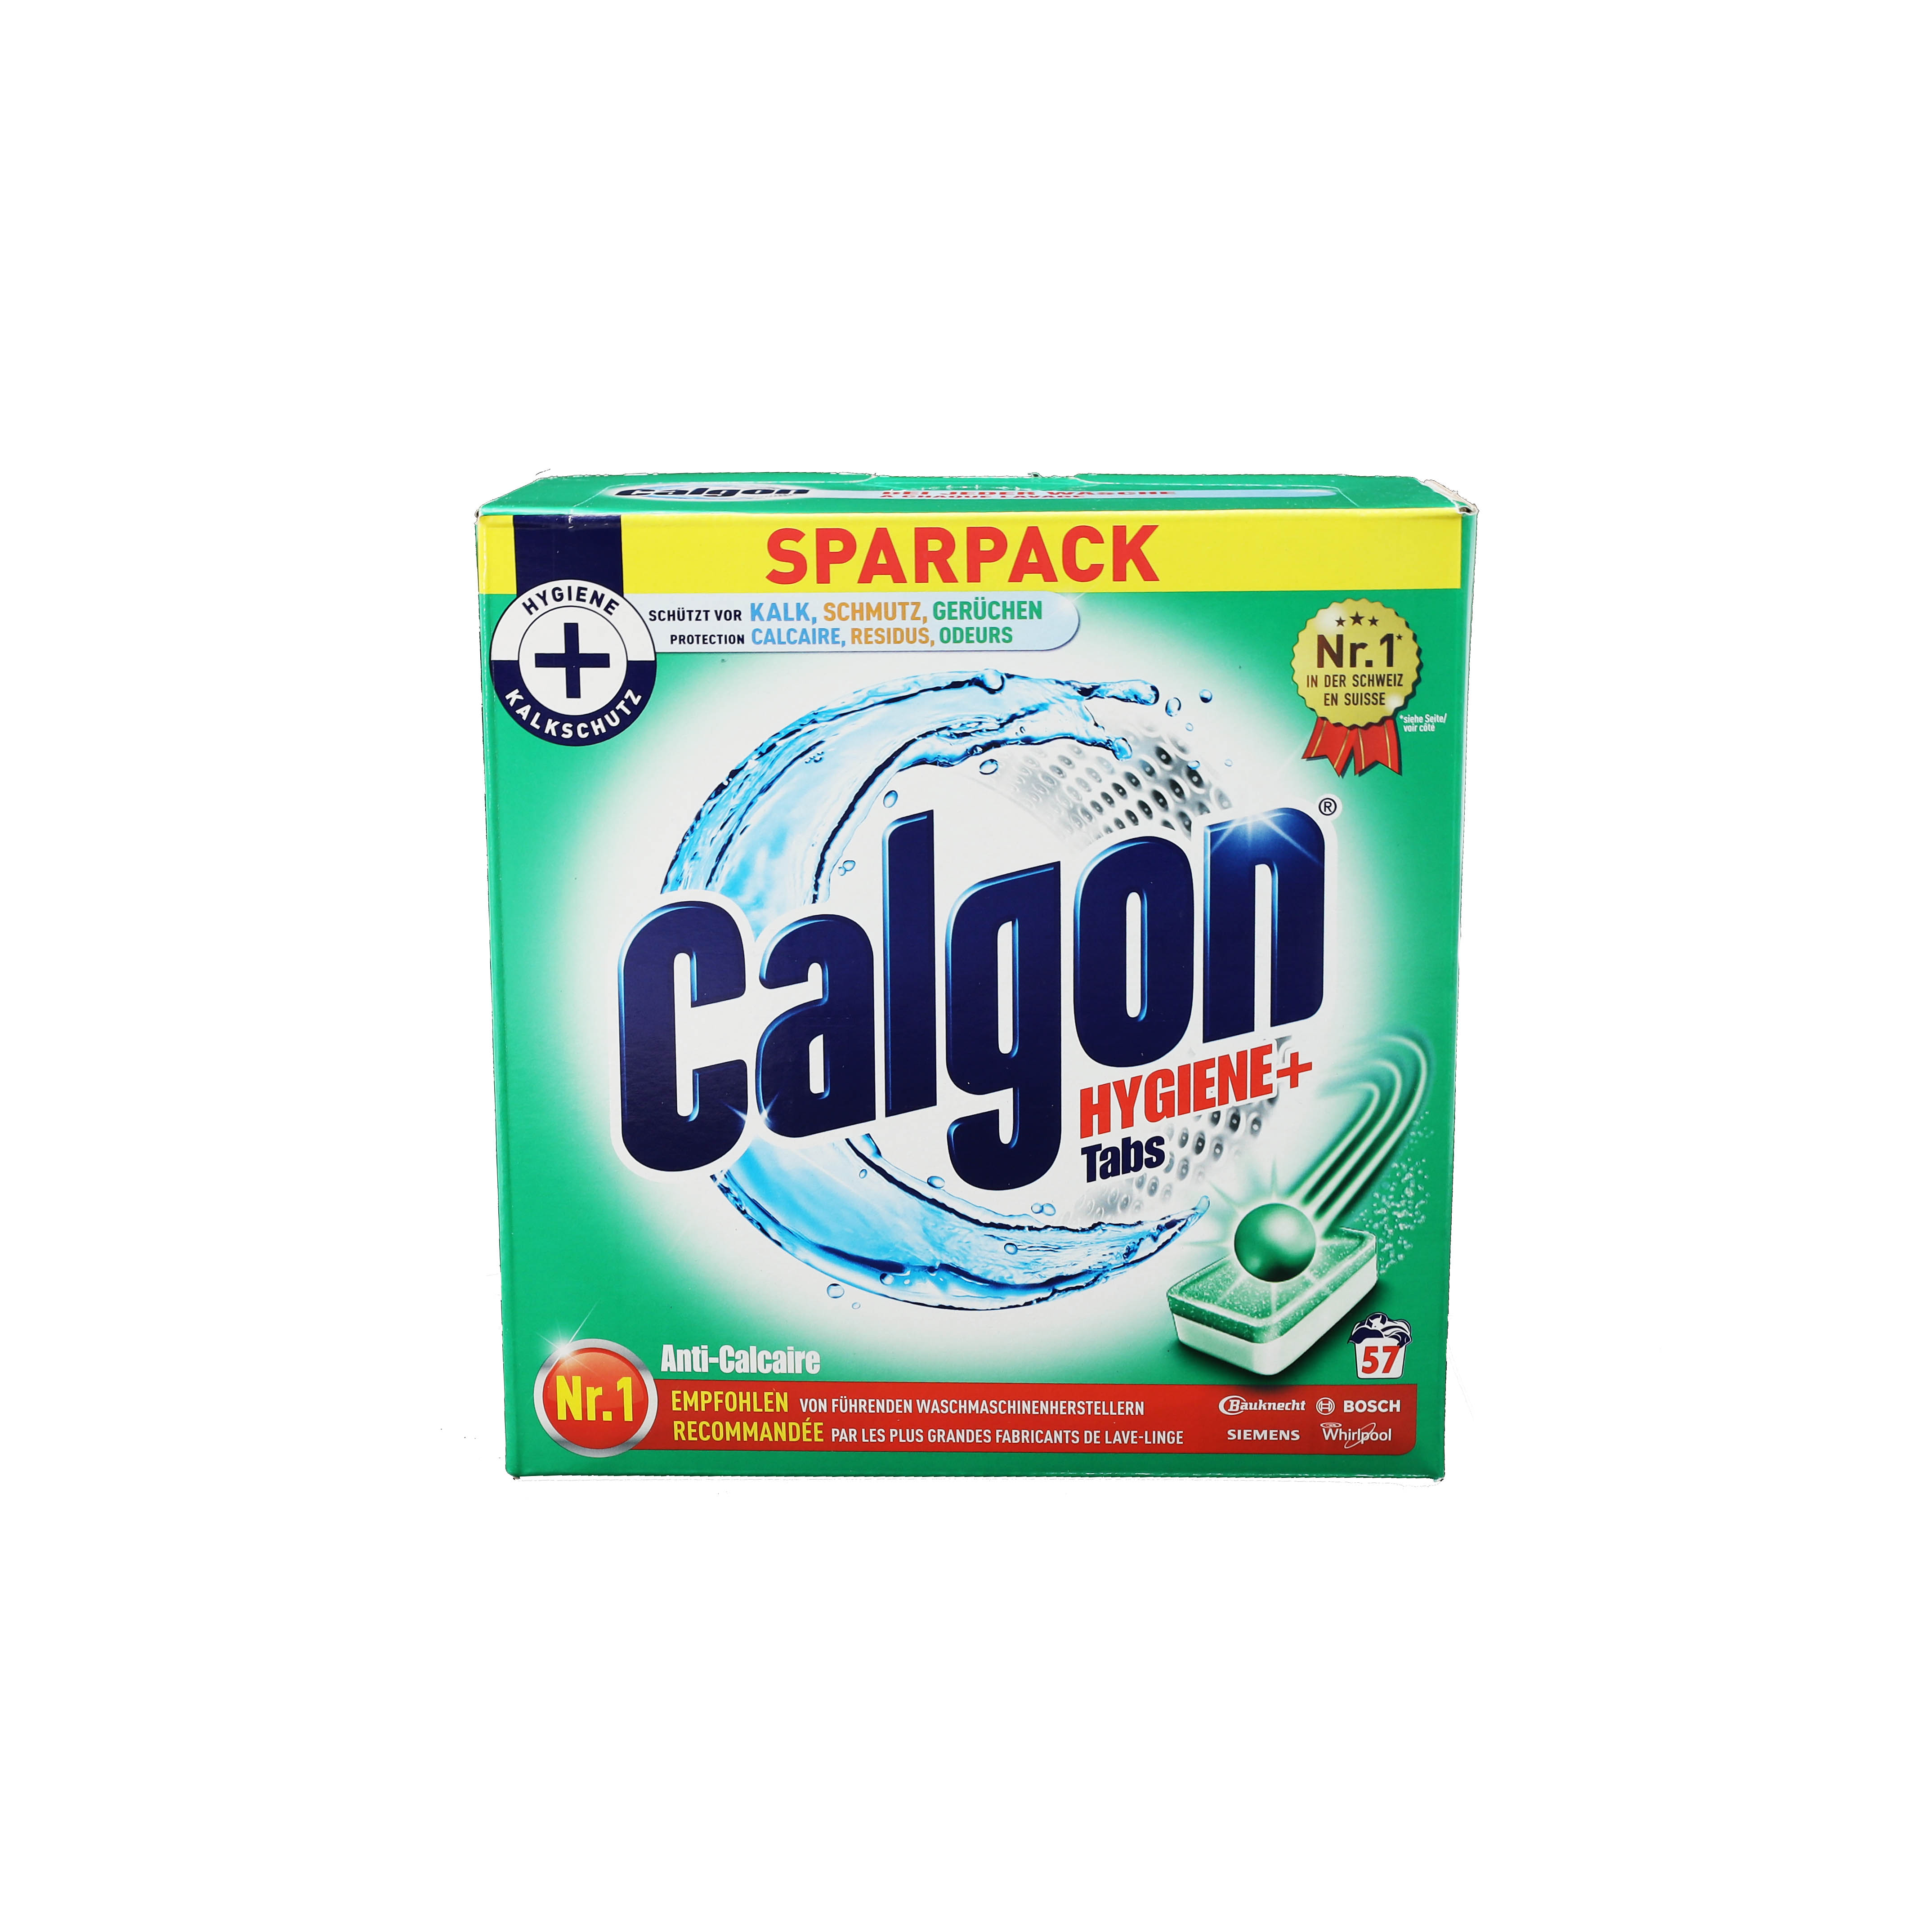 Calgon Waschmaschinenreiniger 57Stück Hygiene+ Tabs